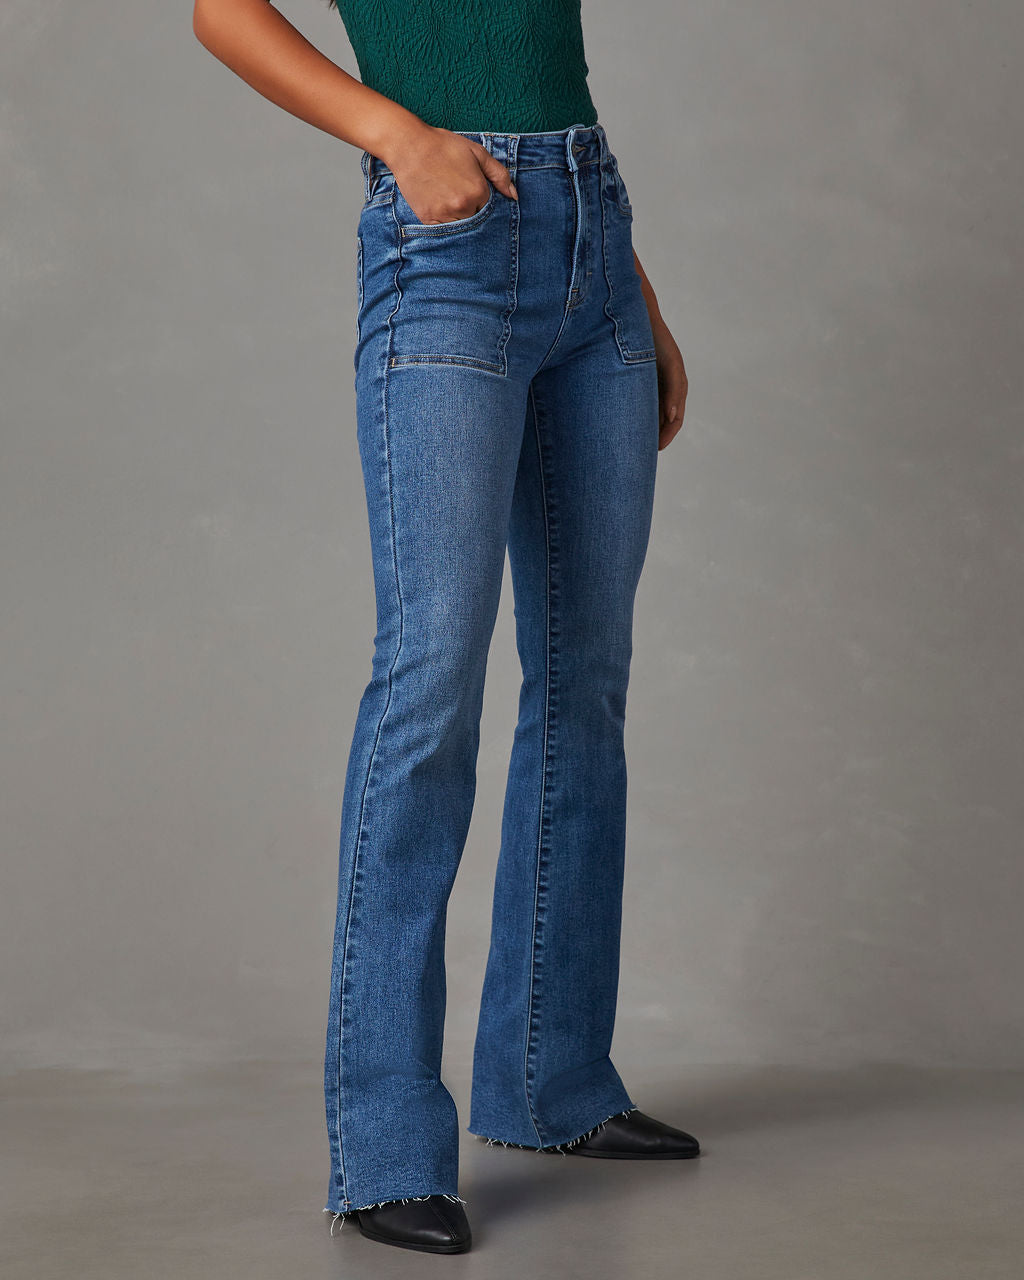 All Worthy Hunter McGrady Tall Flared Jeans-Med Wash-Tall 20-NEW-A455373